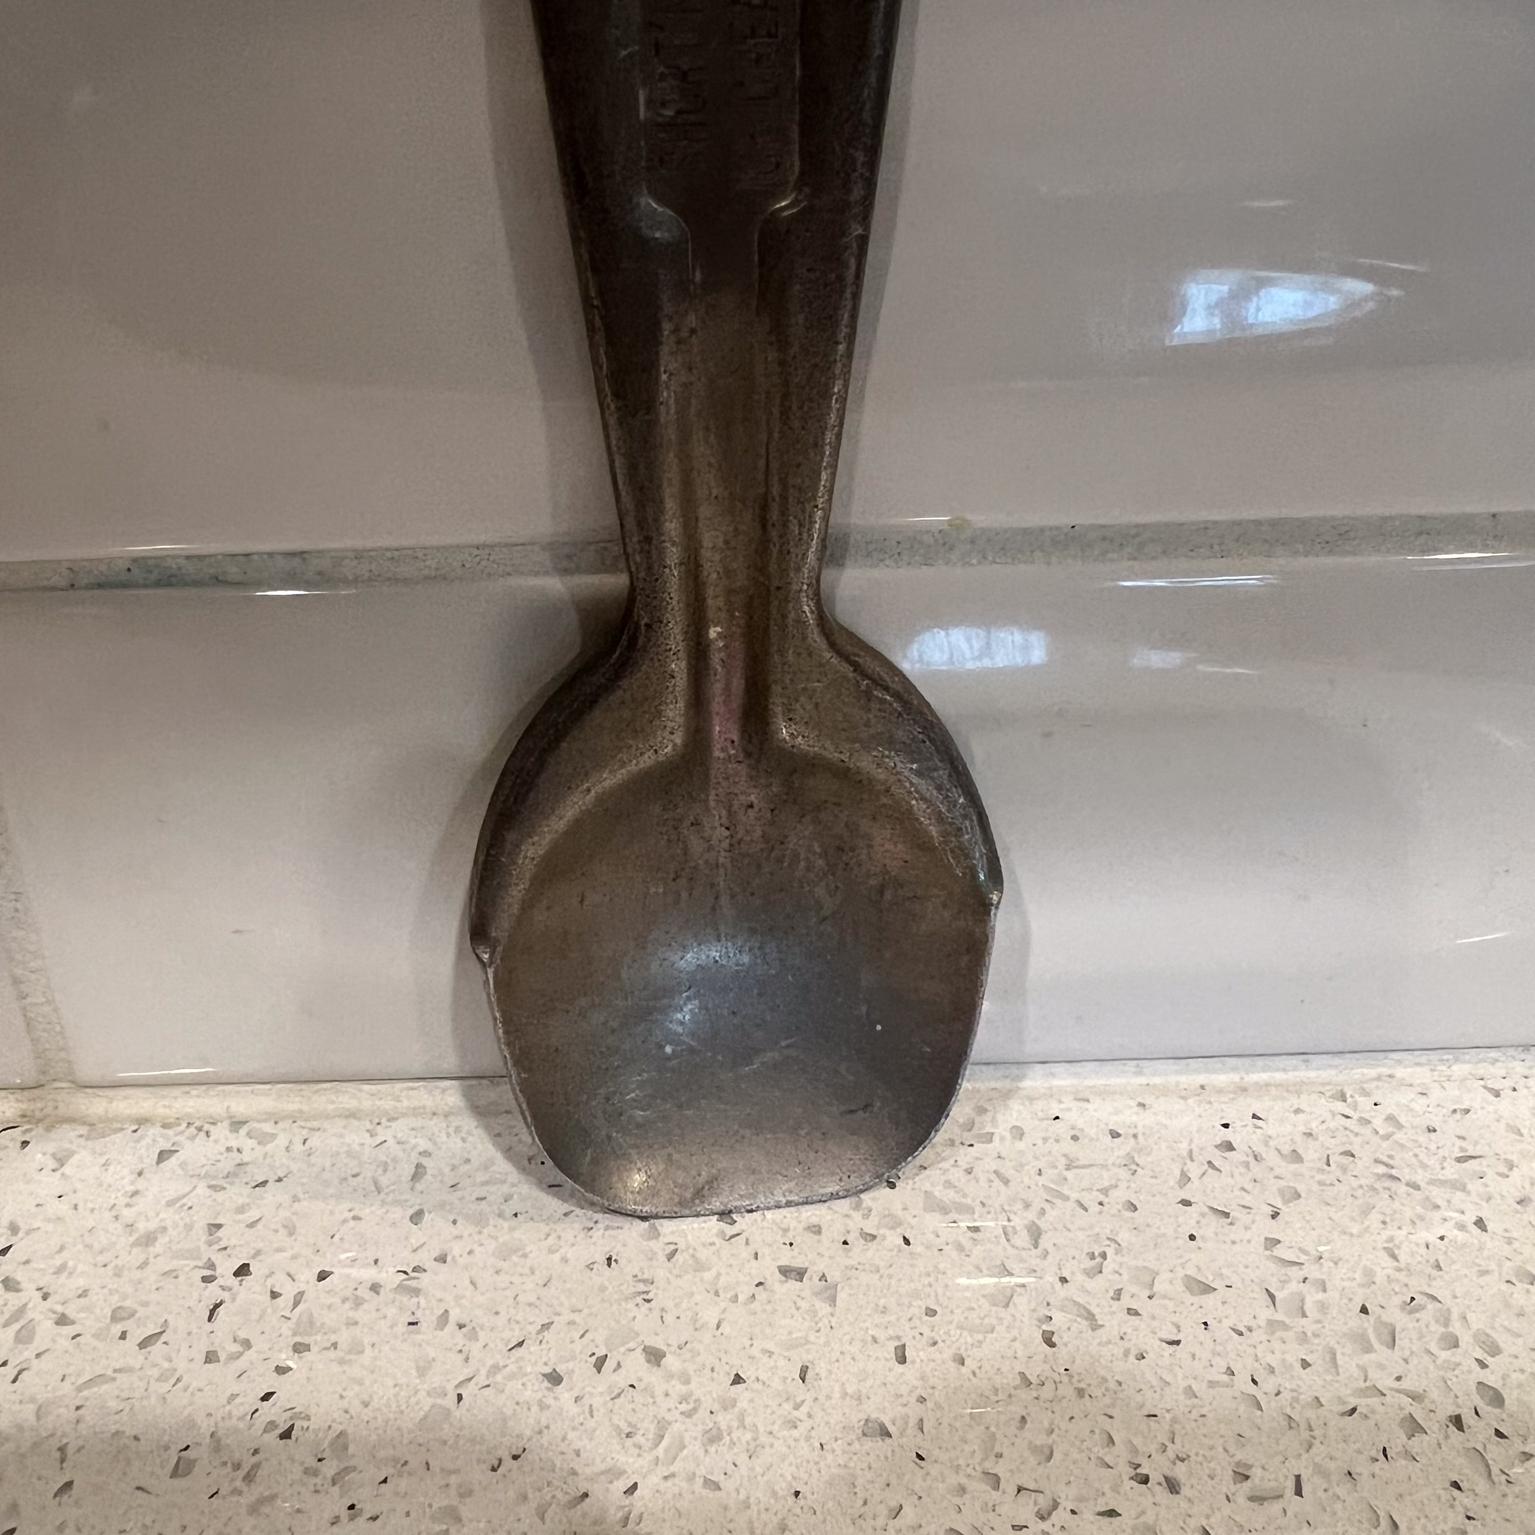 1950s Vintage Ice Cream Scoop Shortening Spoon In Good Condition For Sale In Chula Vista, CA